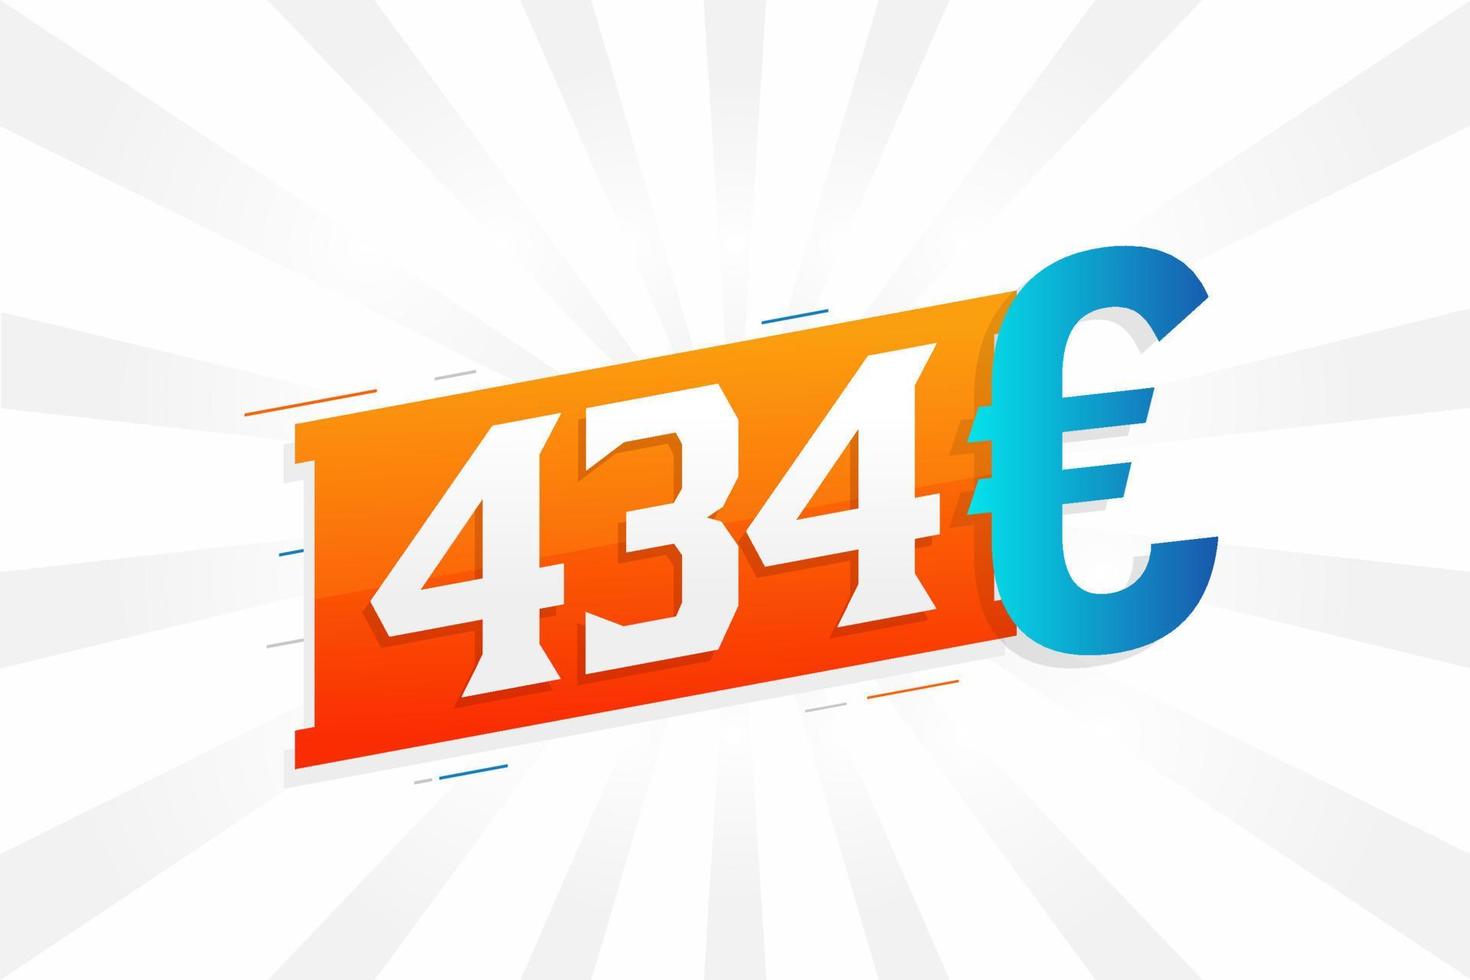 Símbolo de texto vectorial de moneda de 434 euros. 434 euro vector de stock de dinero de la unión europea